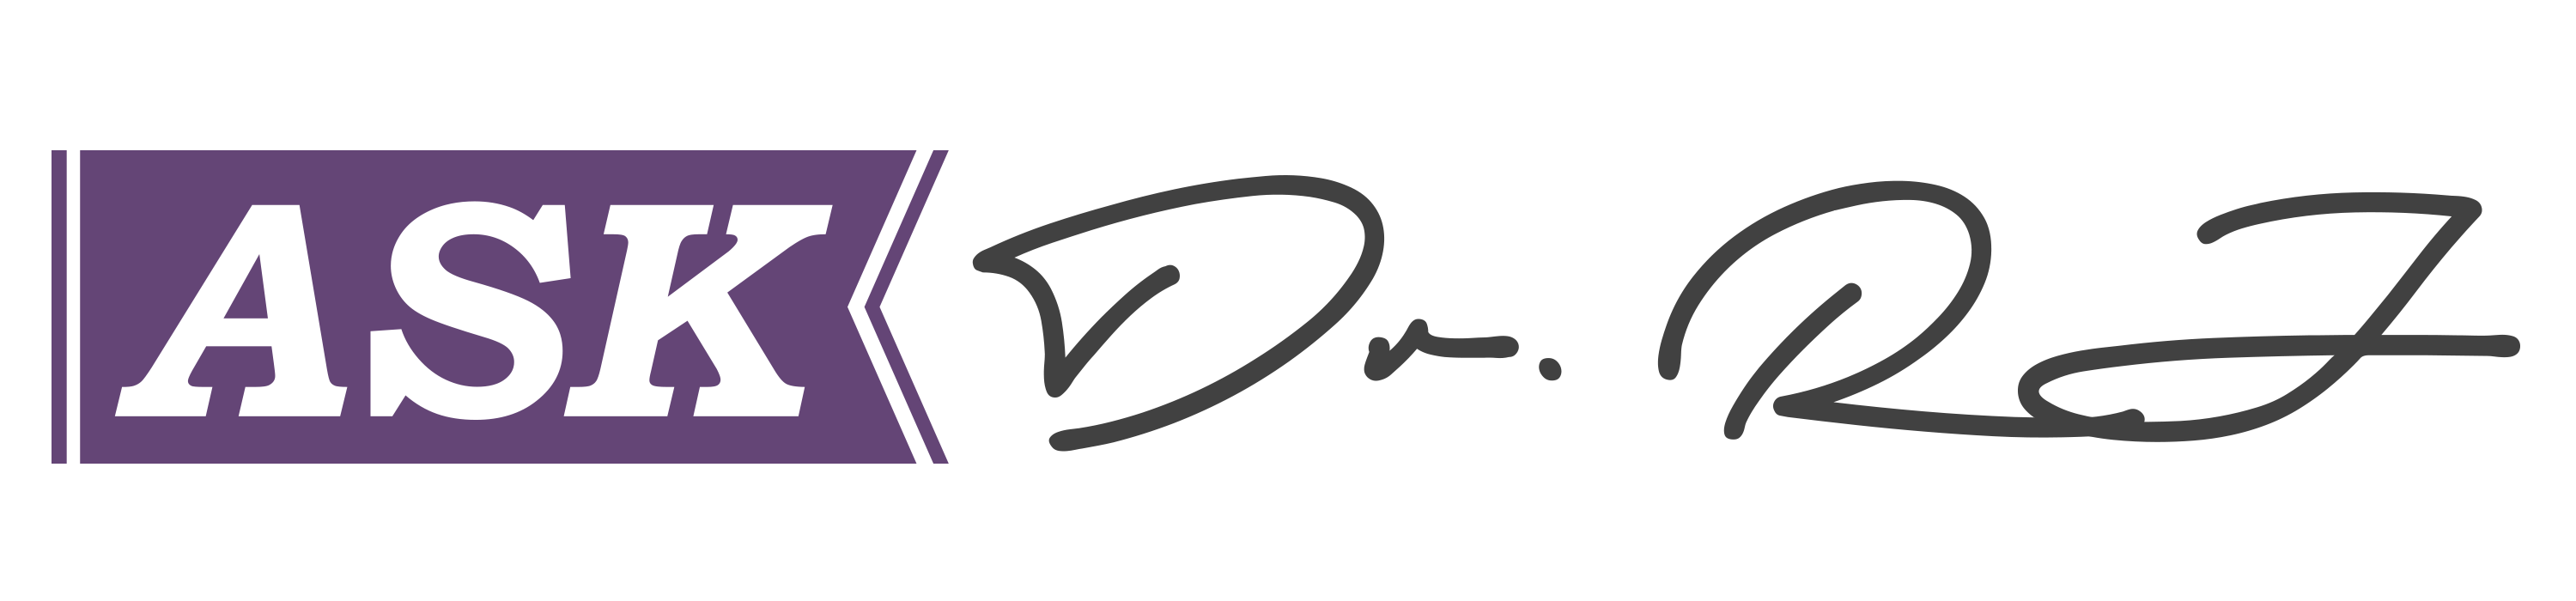 Dr. RJ Logo